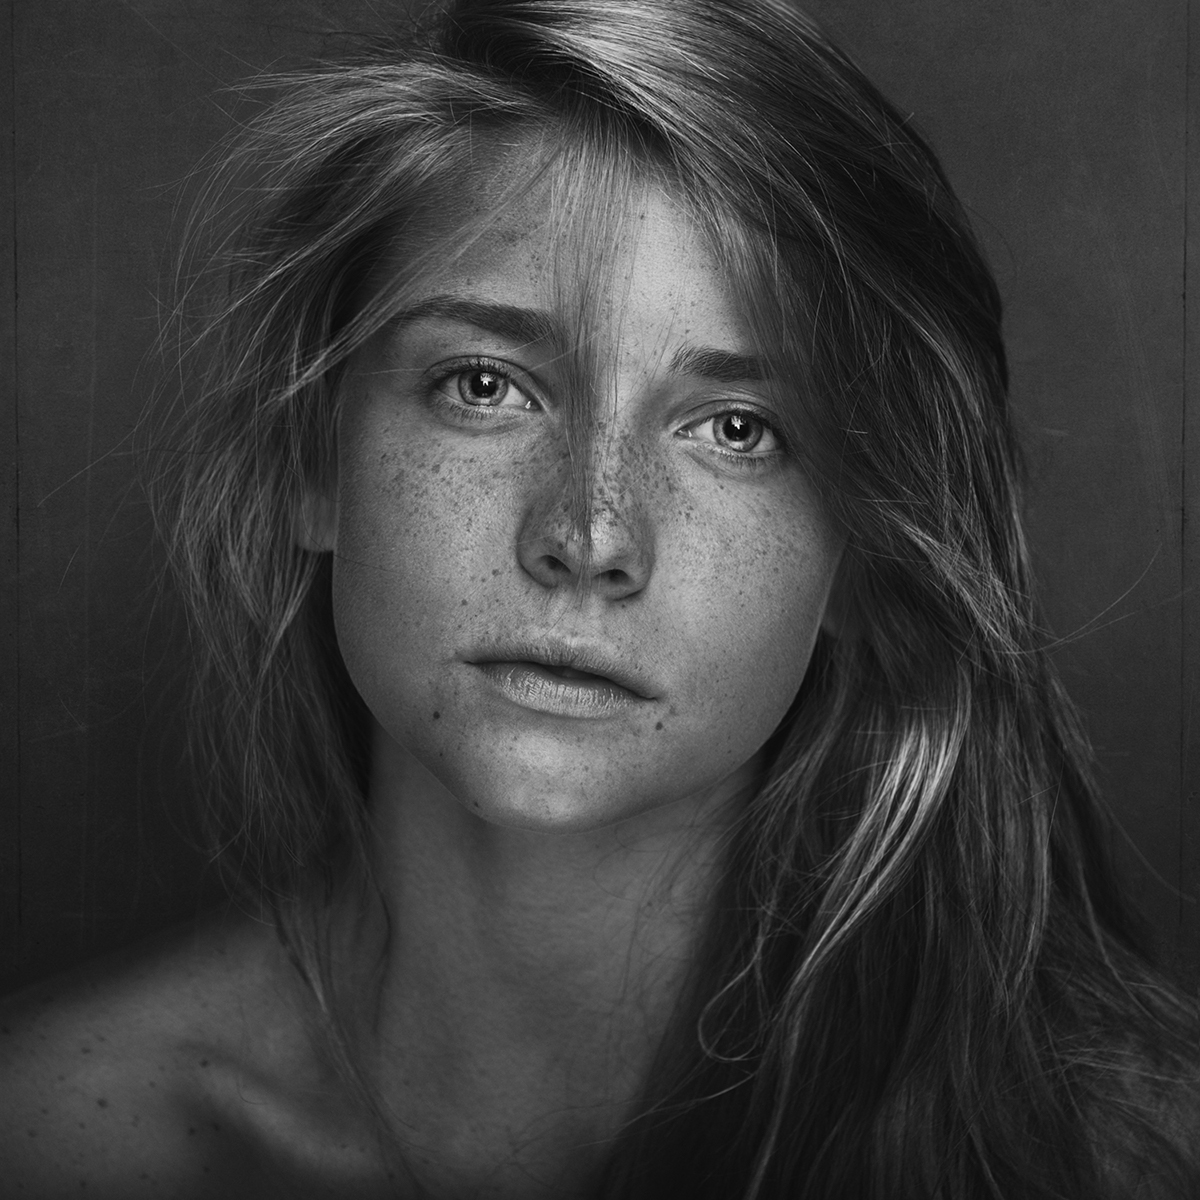 portrait Portraiture girl beauty Beautiful studio model lighting strobist blackandwhite bnw bw Young profoto Elinchrom